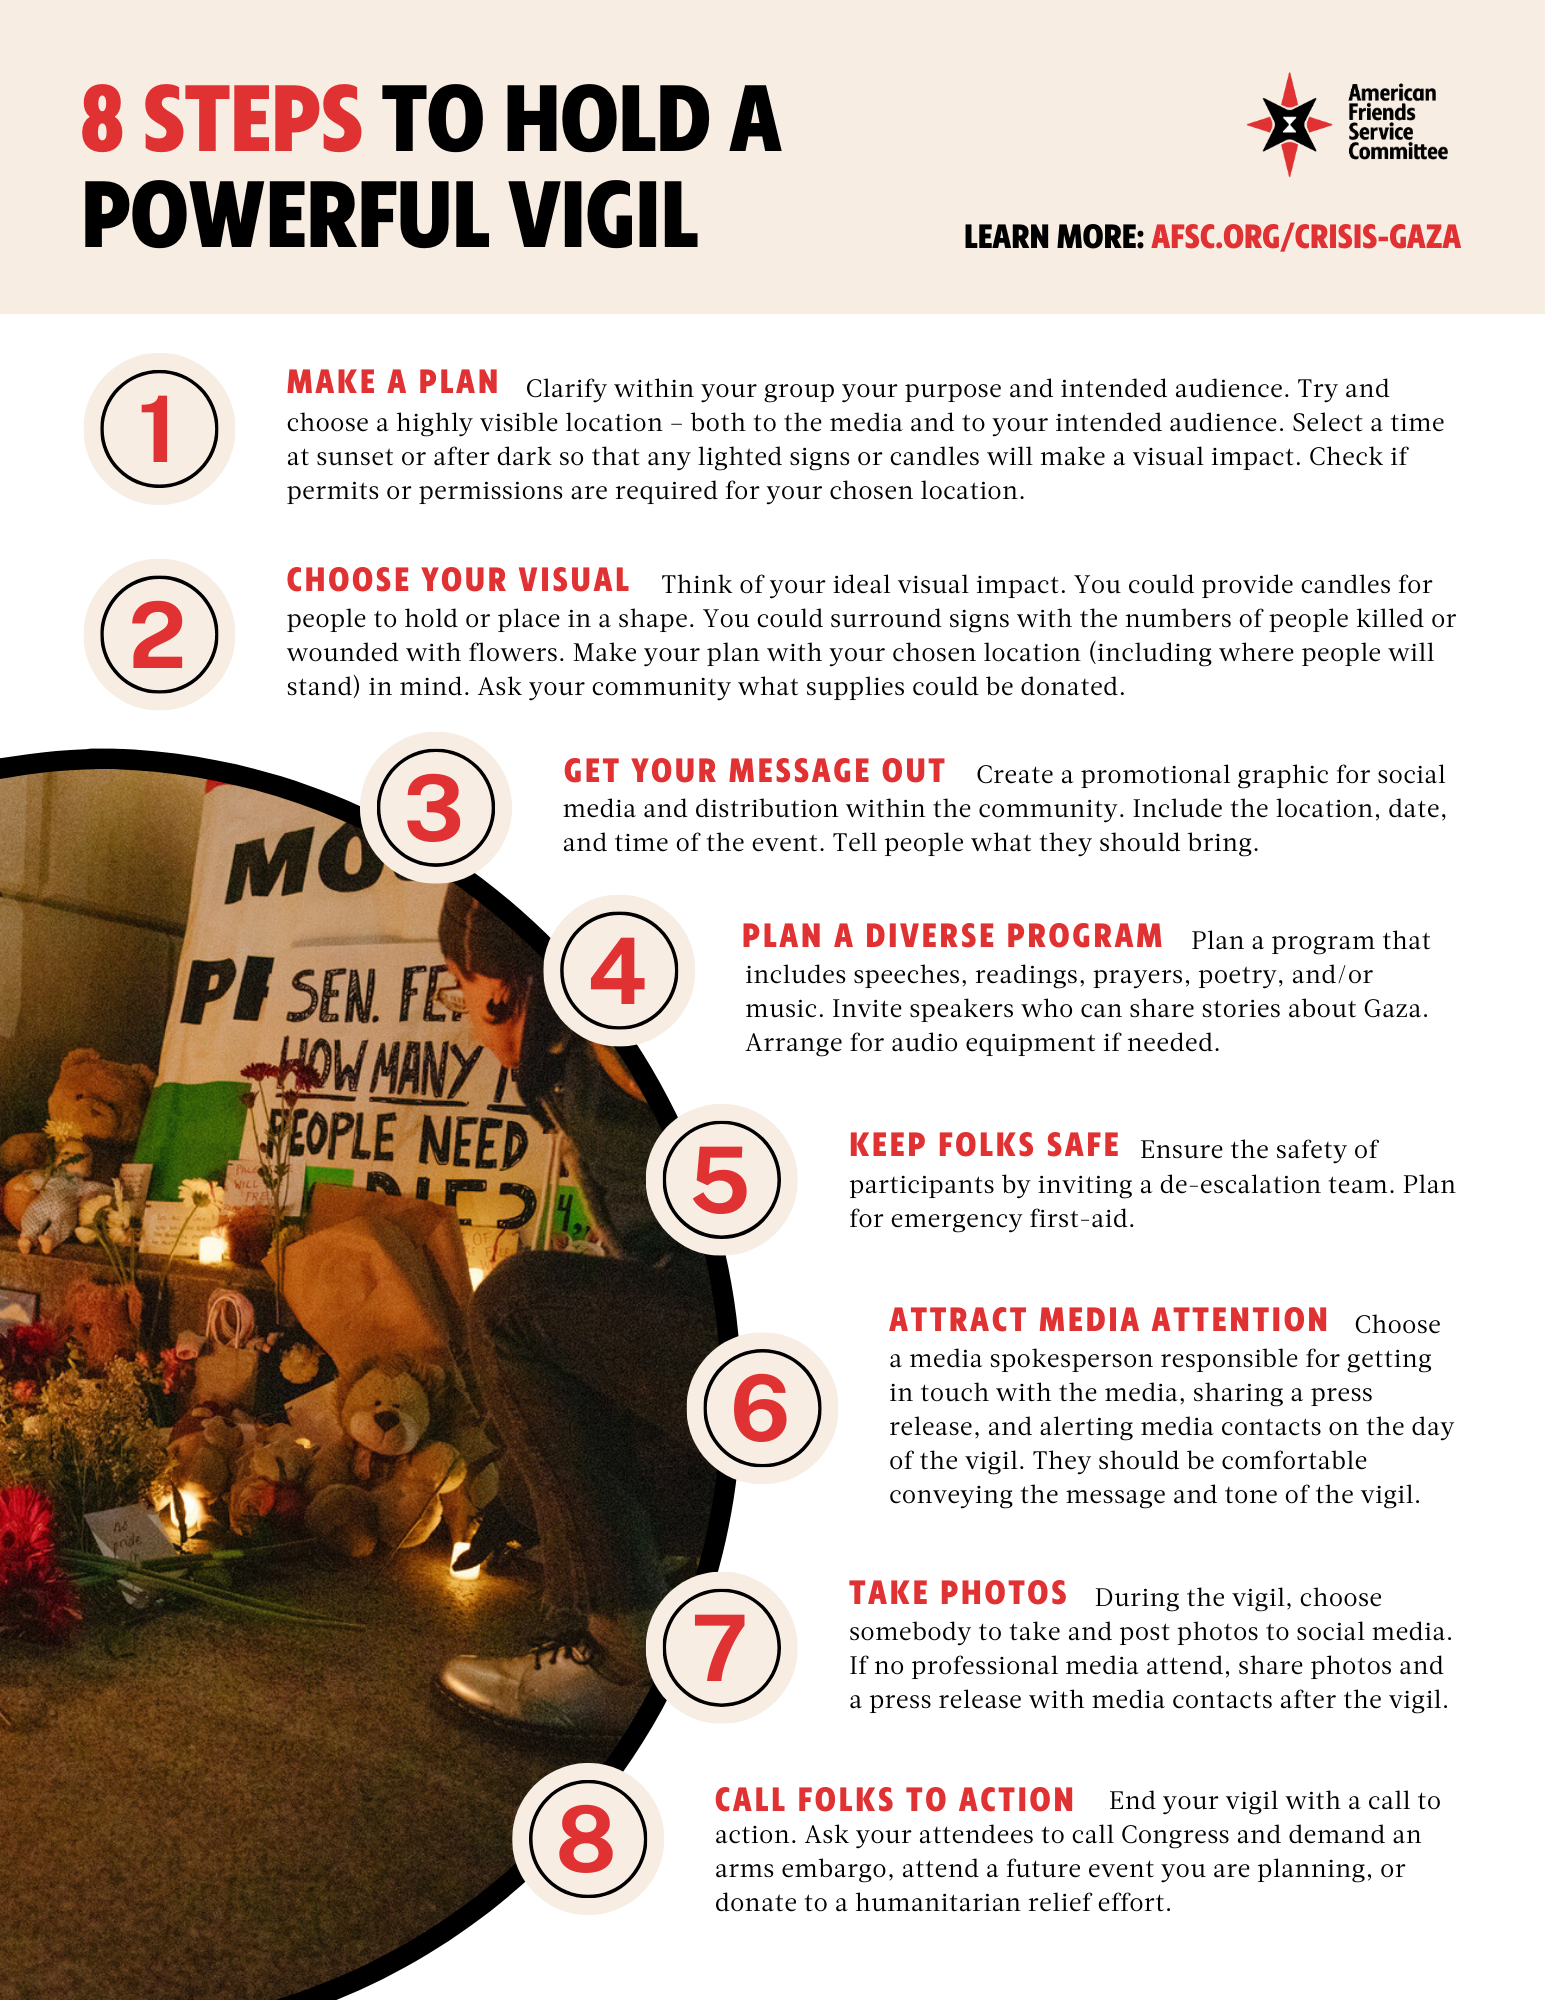 8 Steps to Hold a Powerful Vigil